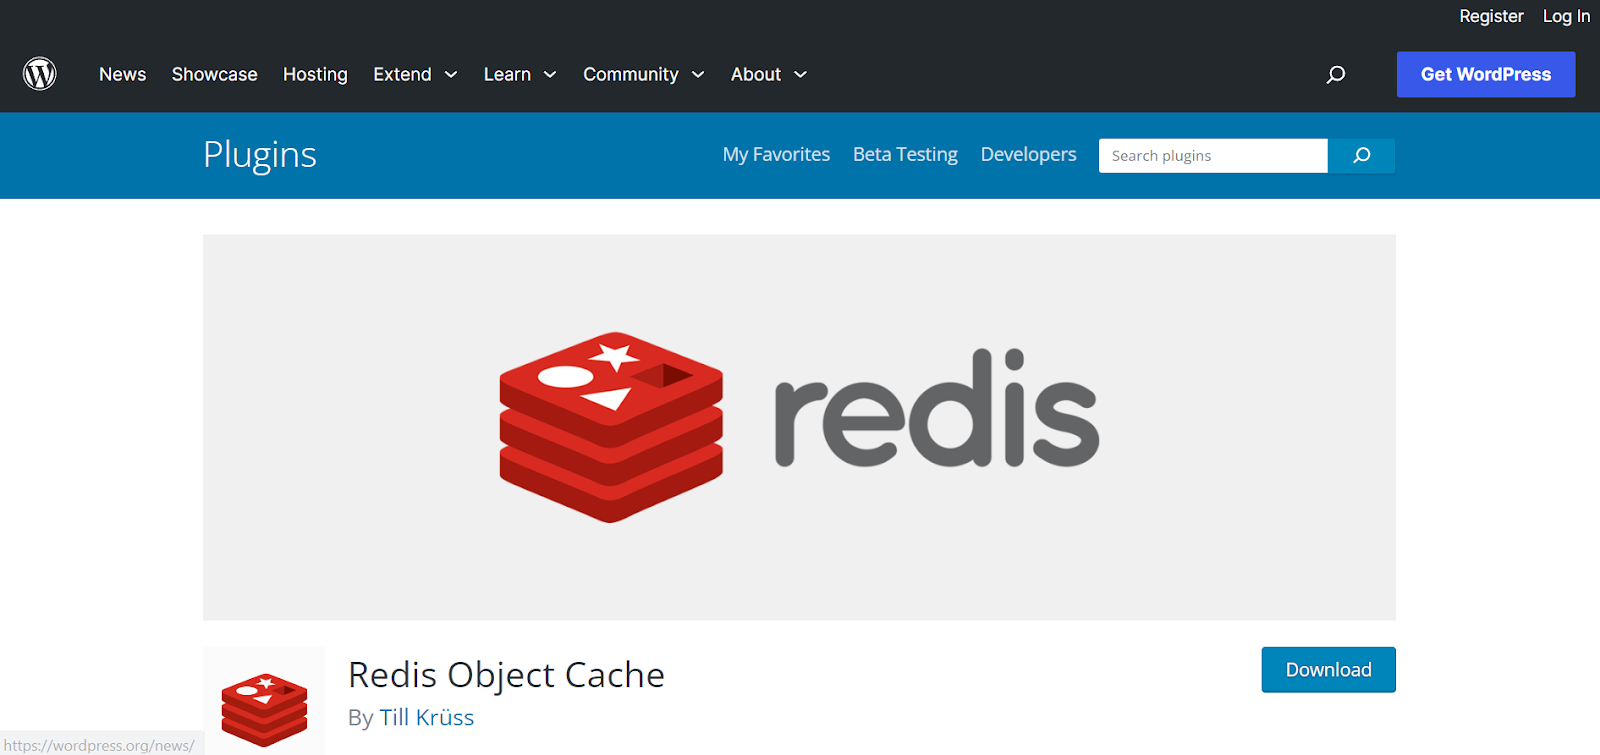 Redis Object Cache Plugin Image